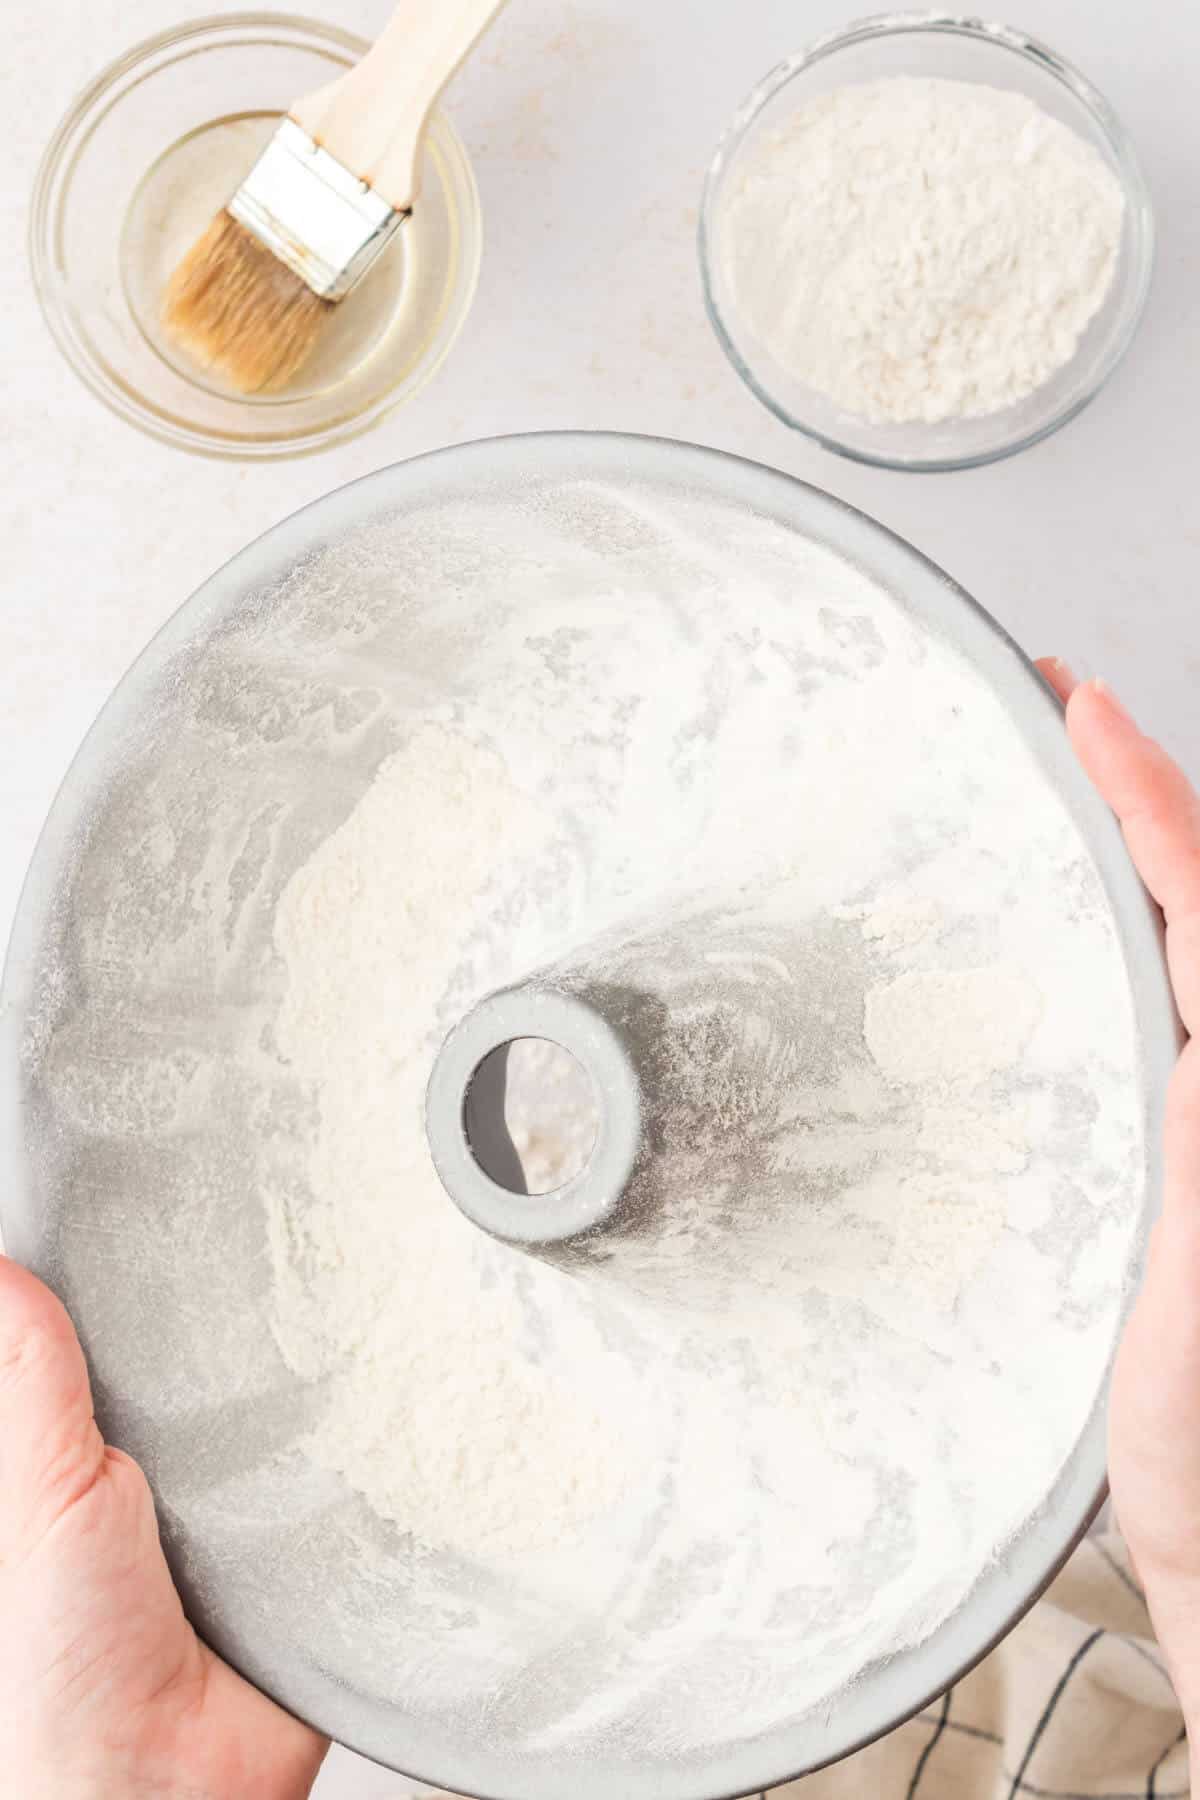 Flour in a cake pan.